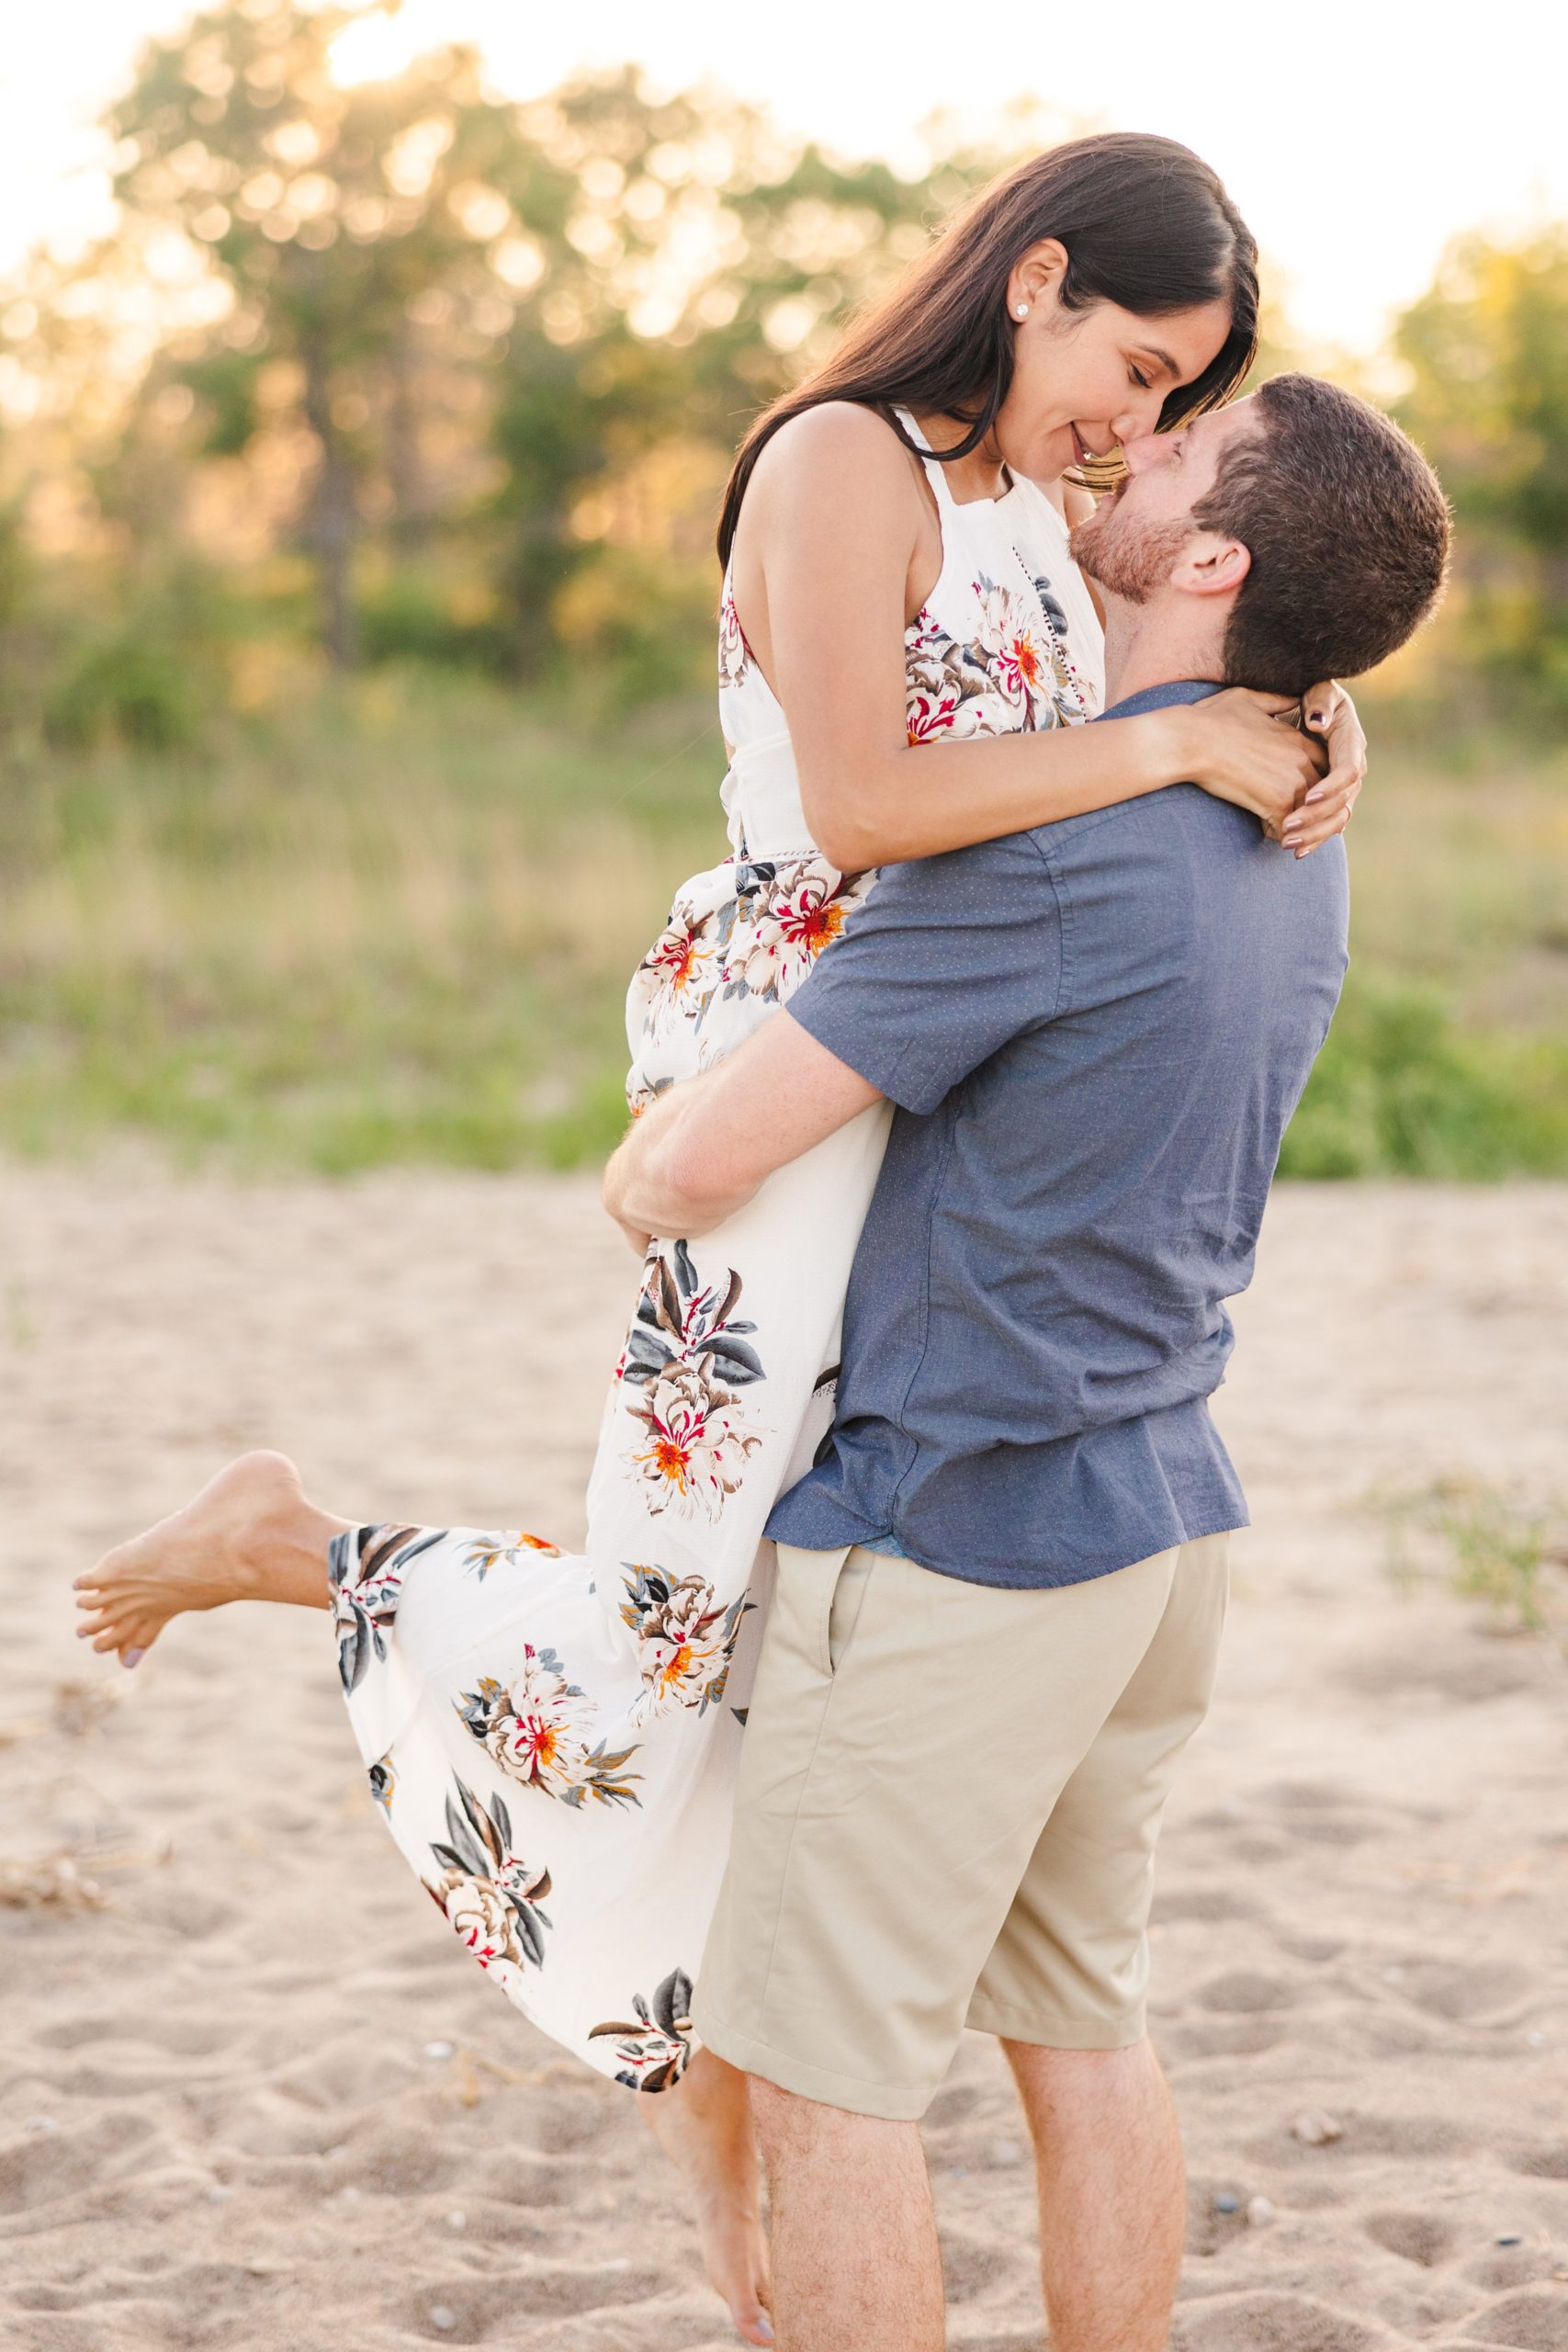 Couple celebrate their engagement at Illinois State Beach in Zion, Illinois. Photo taken by Austin Wedding Photographers, Joanna & Brett Photography